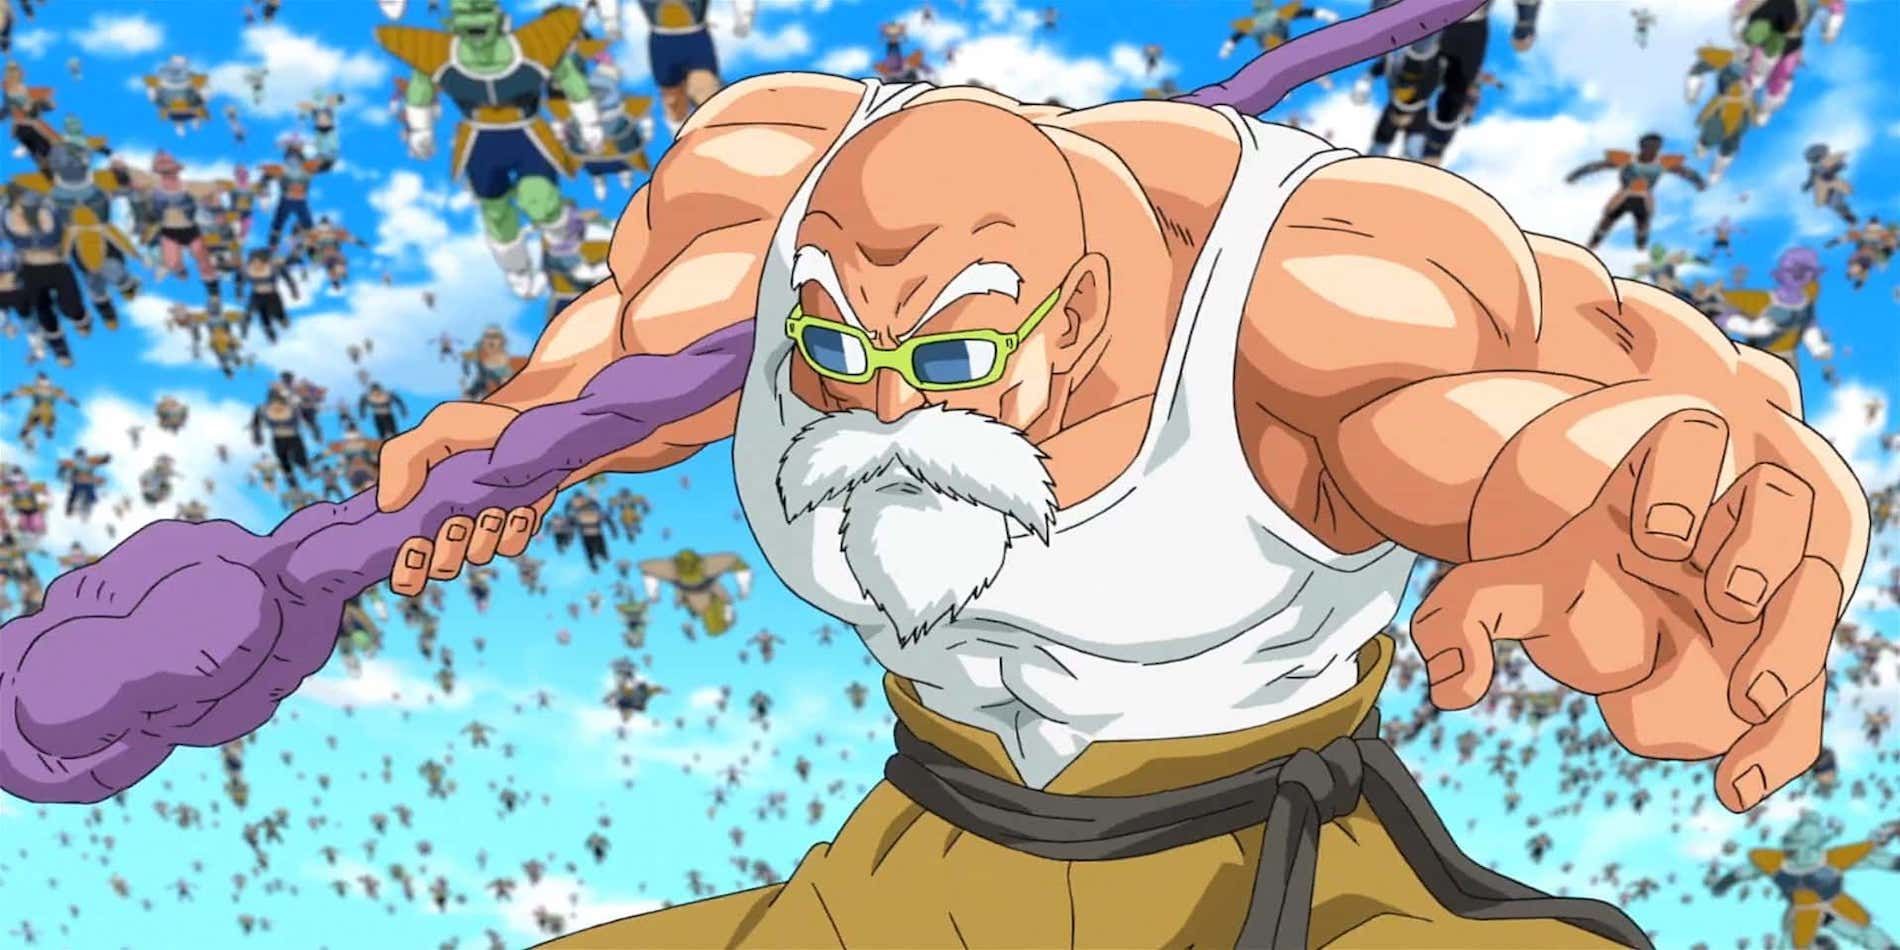  Dragon Ball Super Muscular Master Roshi fighting